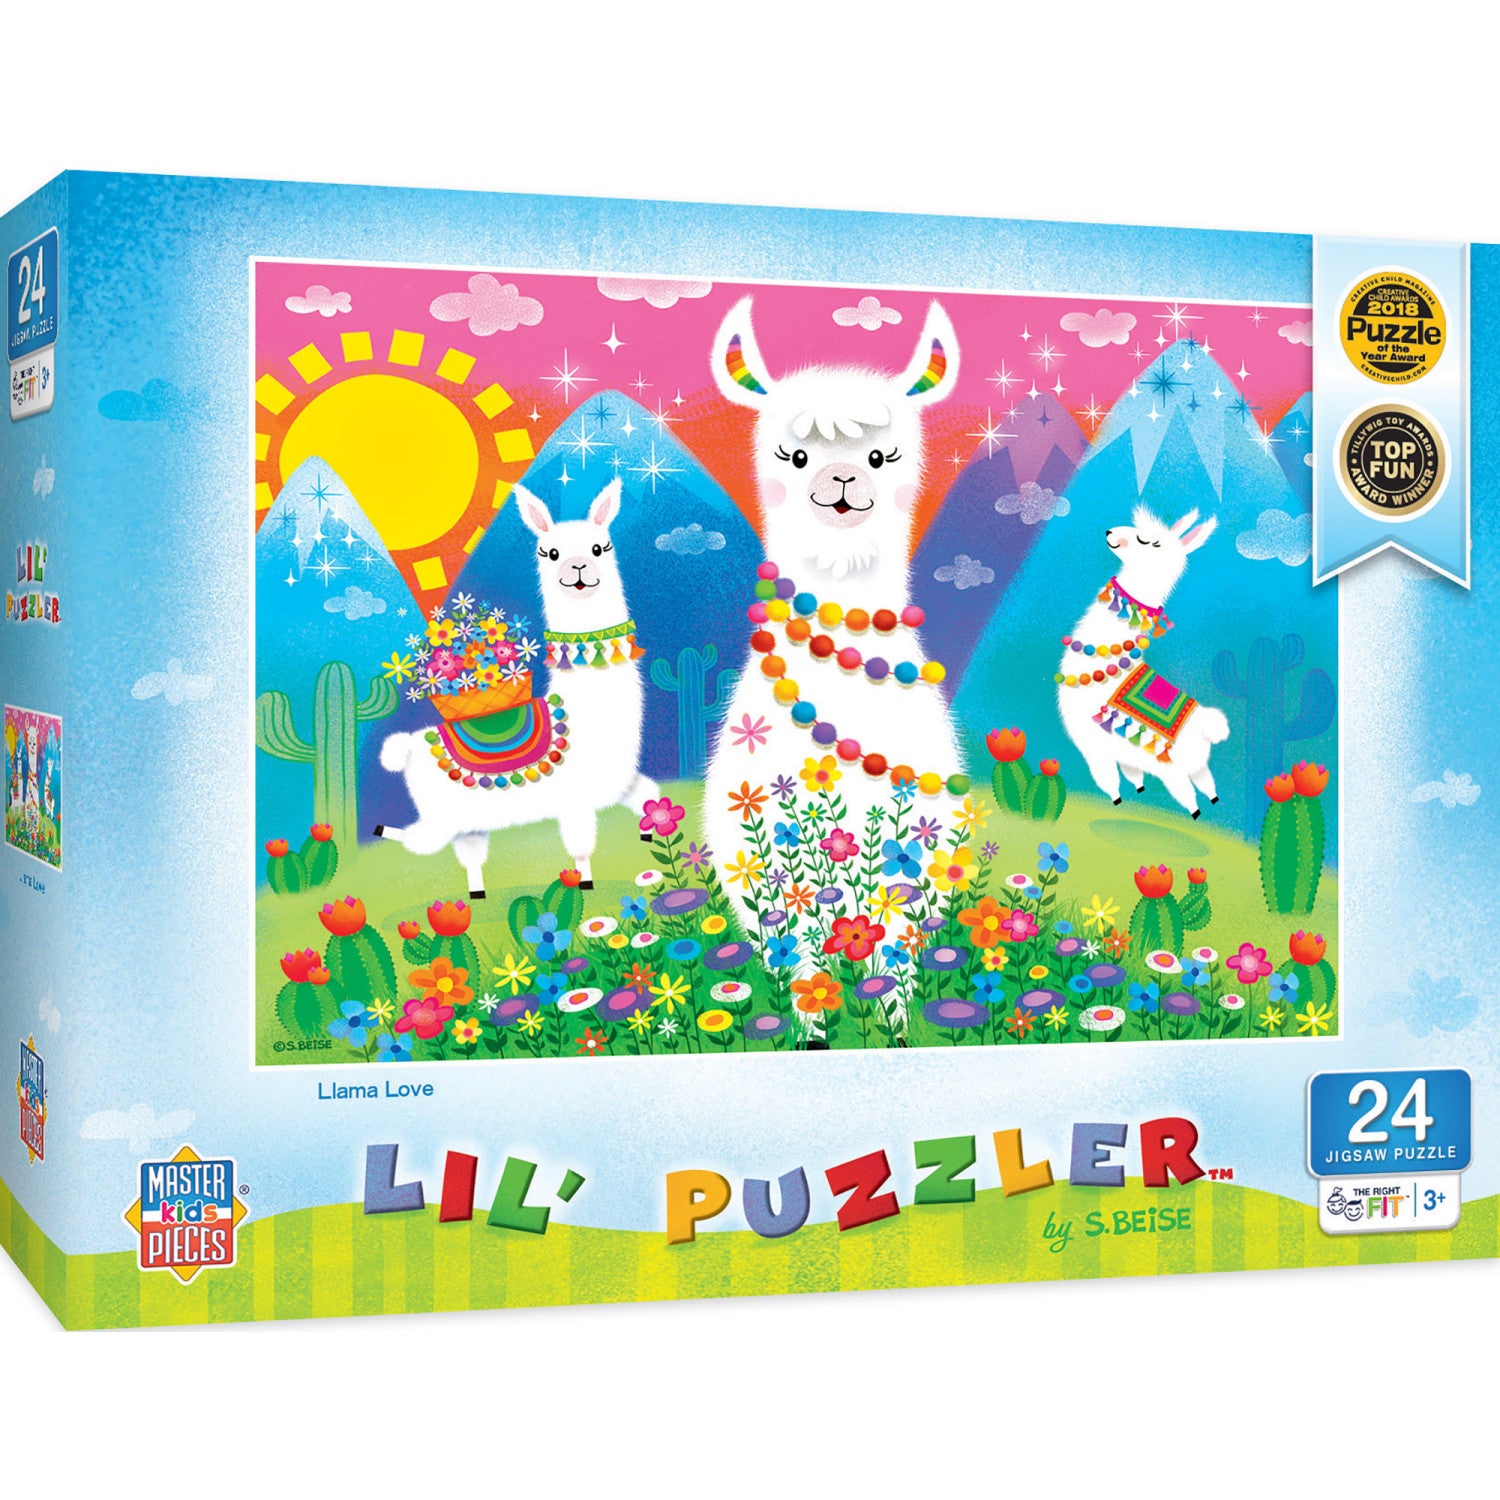 Lil Puzzler - Llama Love 24 Piece Jigsaw Puzzle